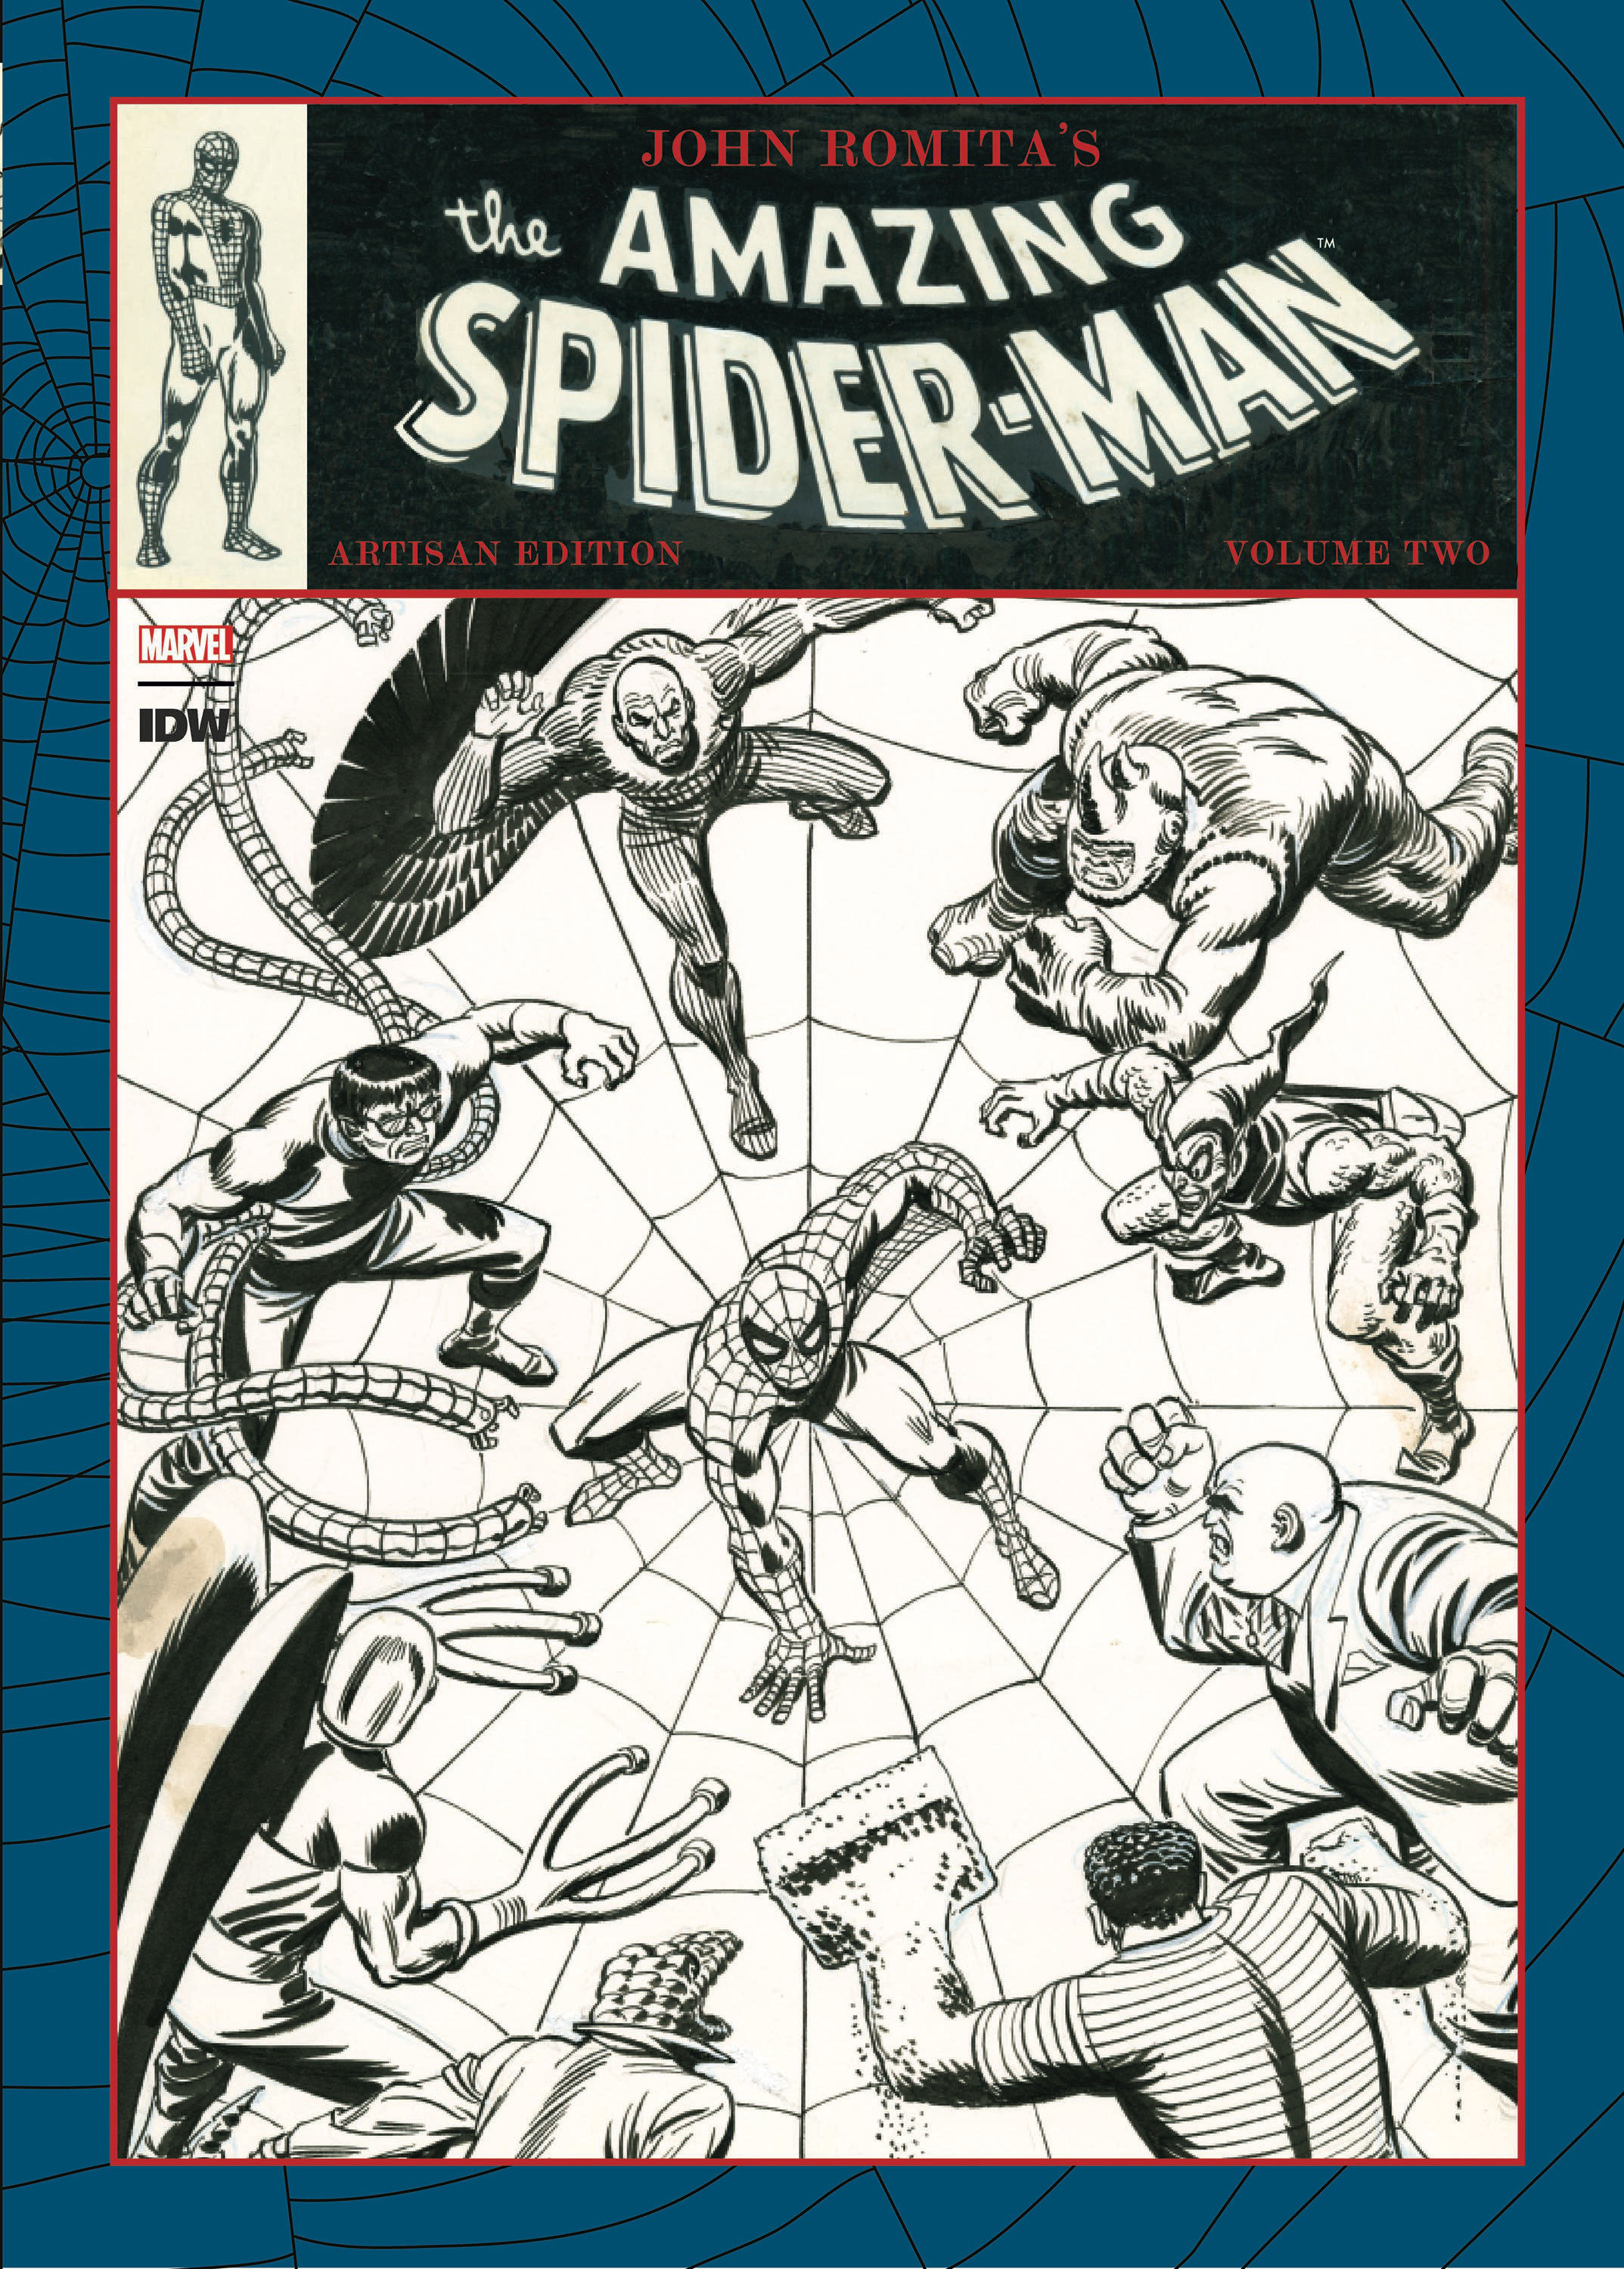 John Romita's The Amazing Spider-Man Volume 2 Artisan Edition